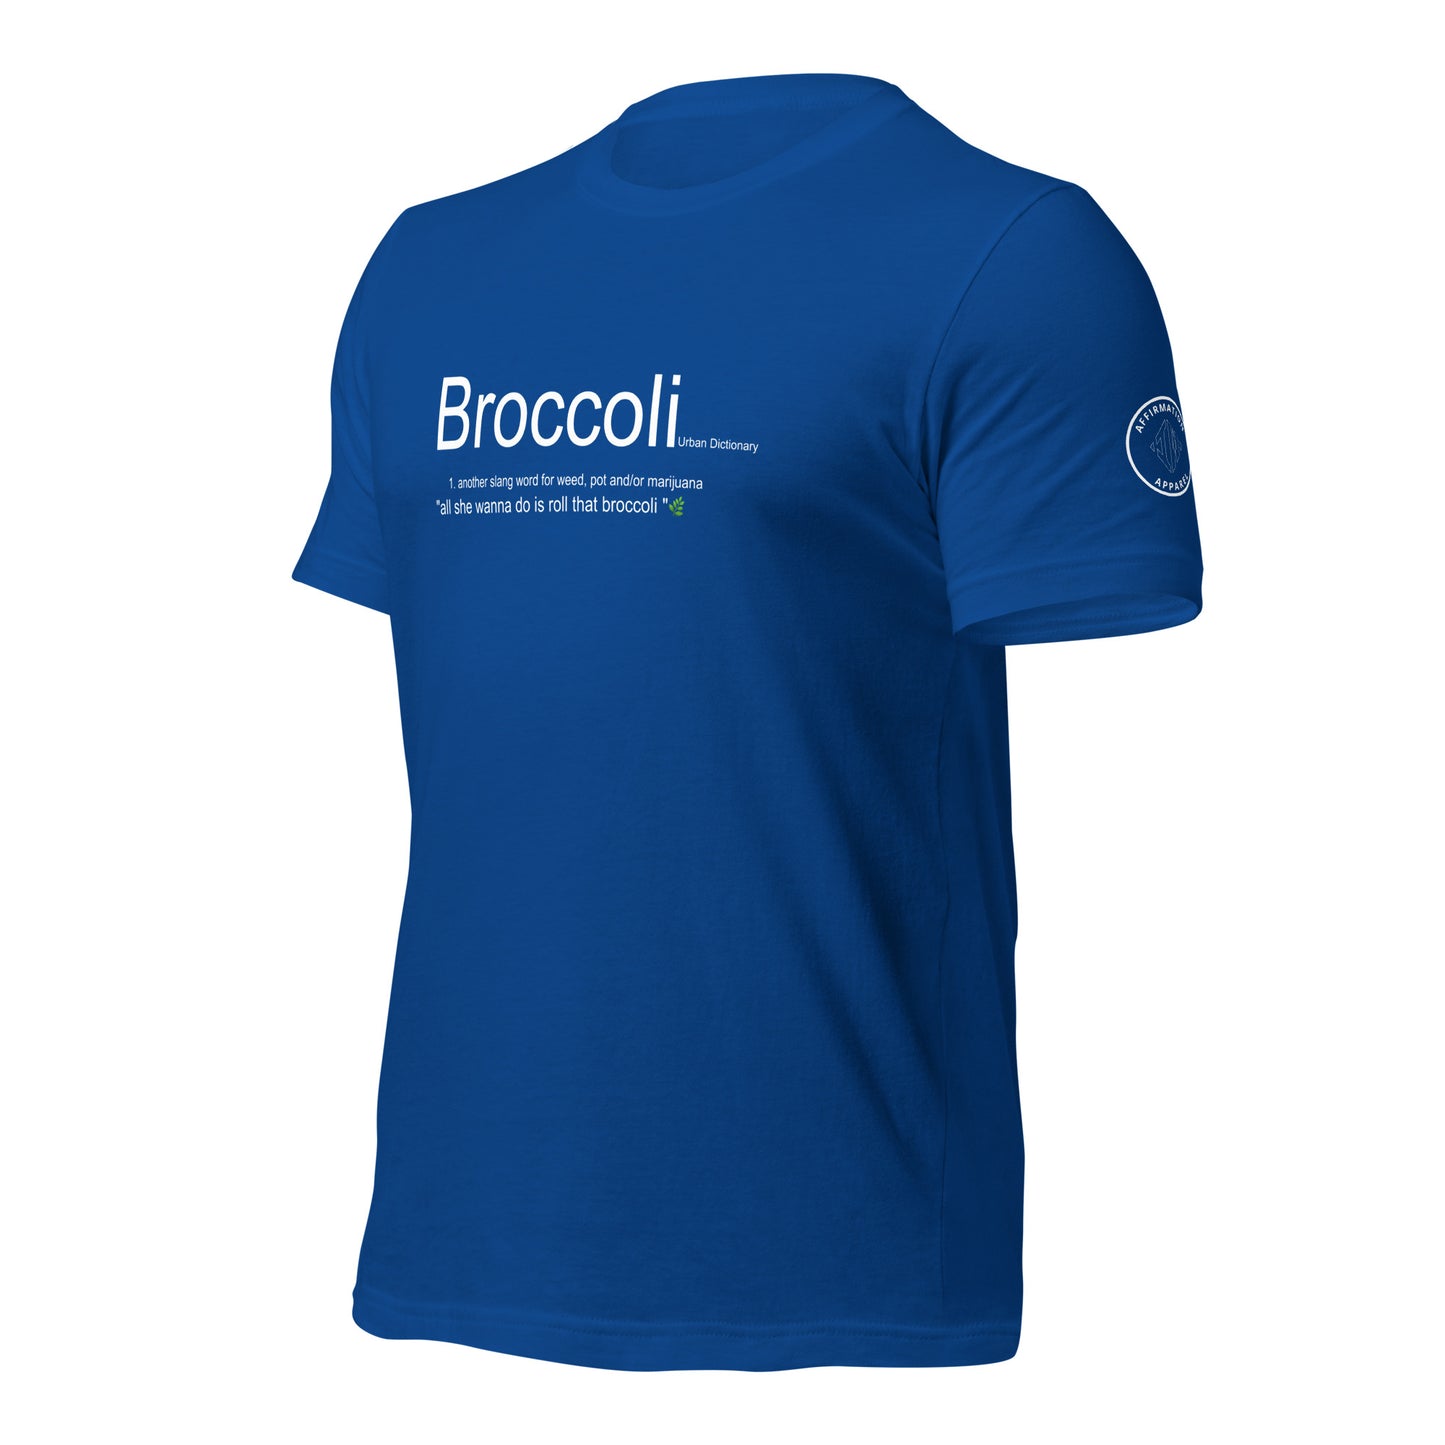 Broccoli - men's